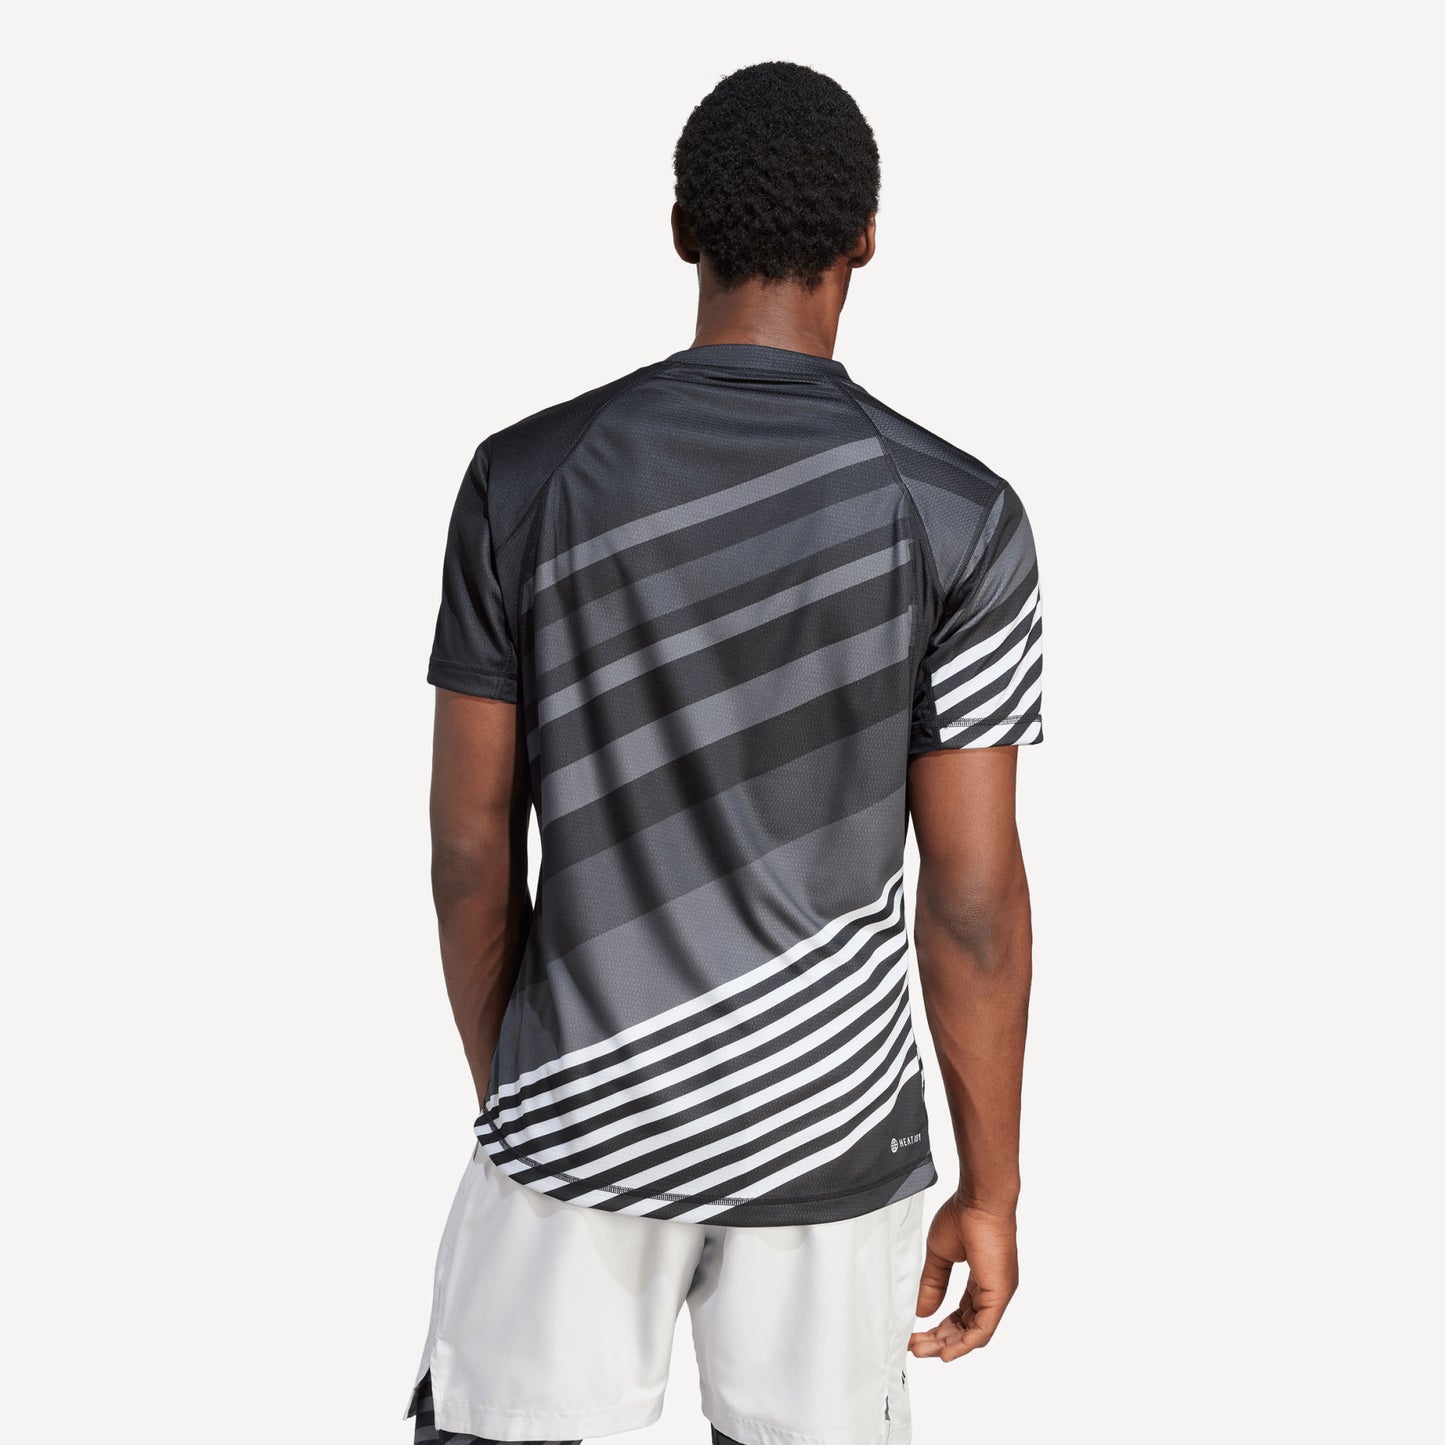 adidas Freelift New York Pro Men's Tennis Shirt Black (2)